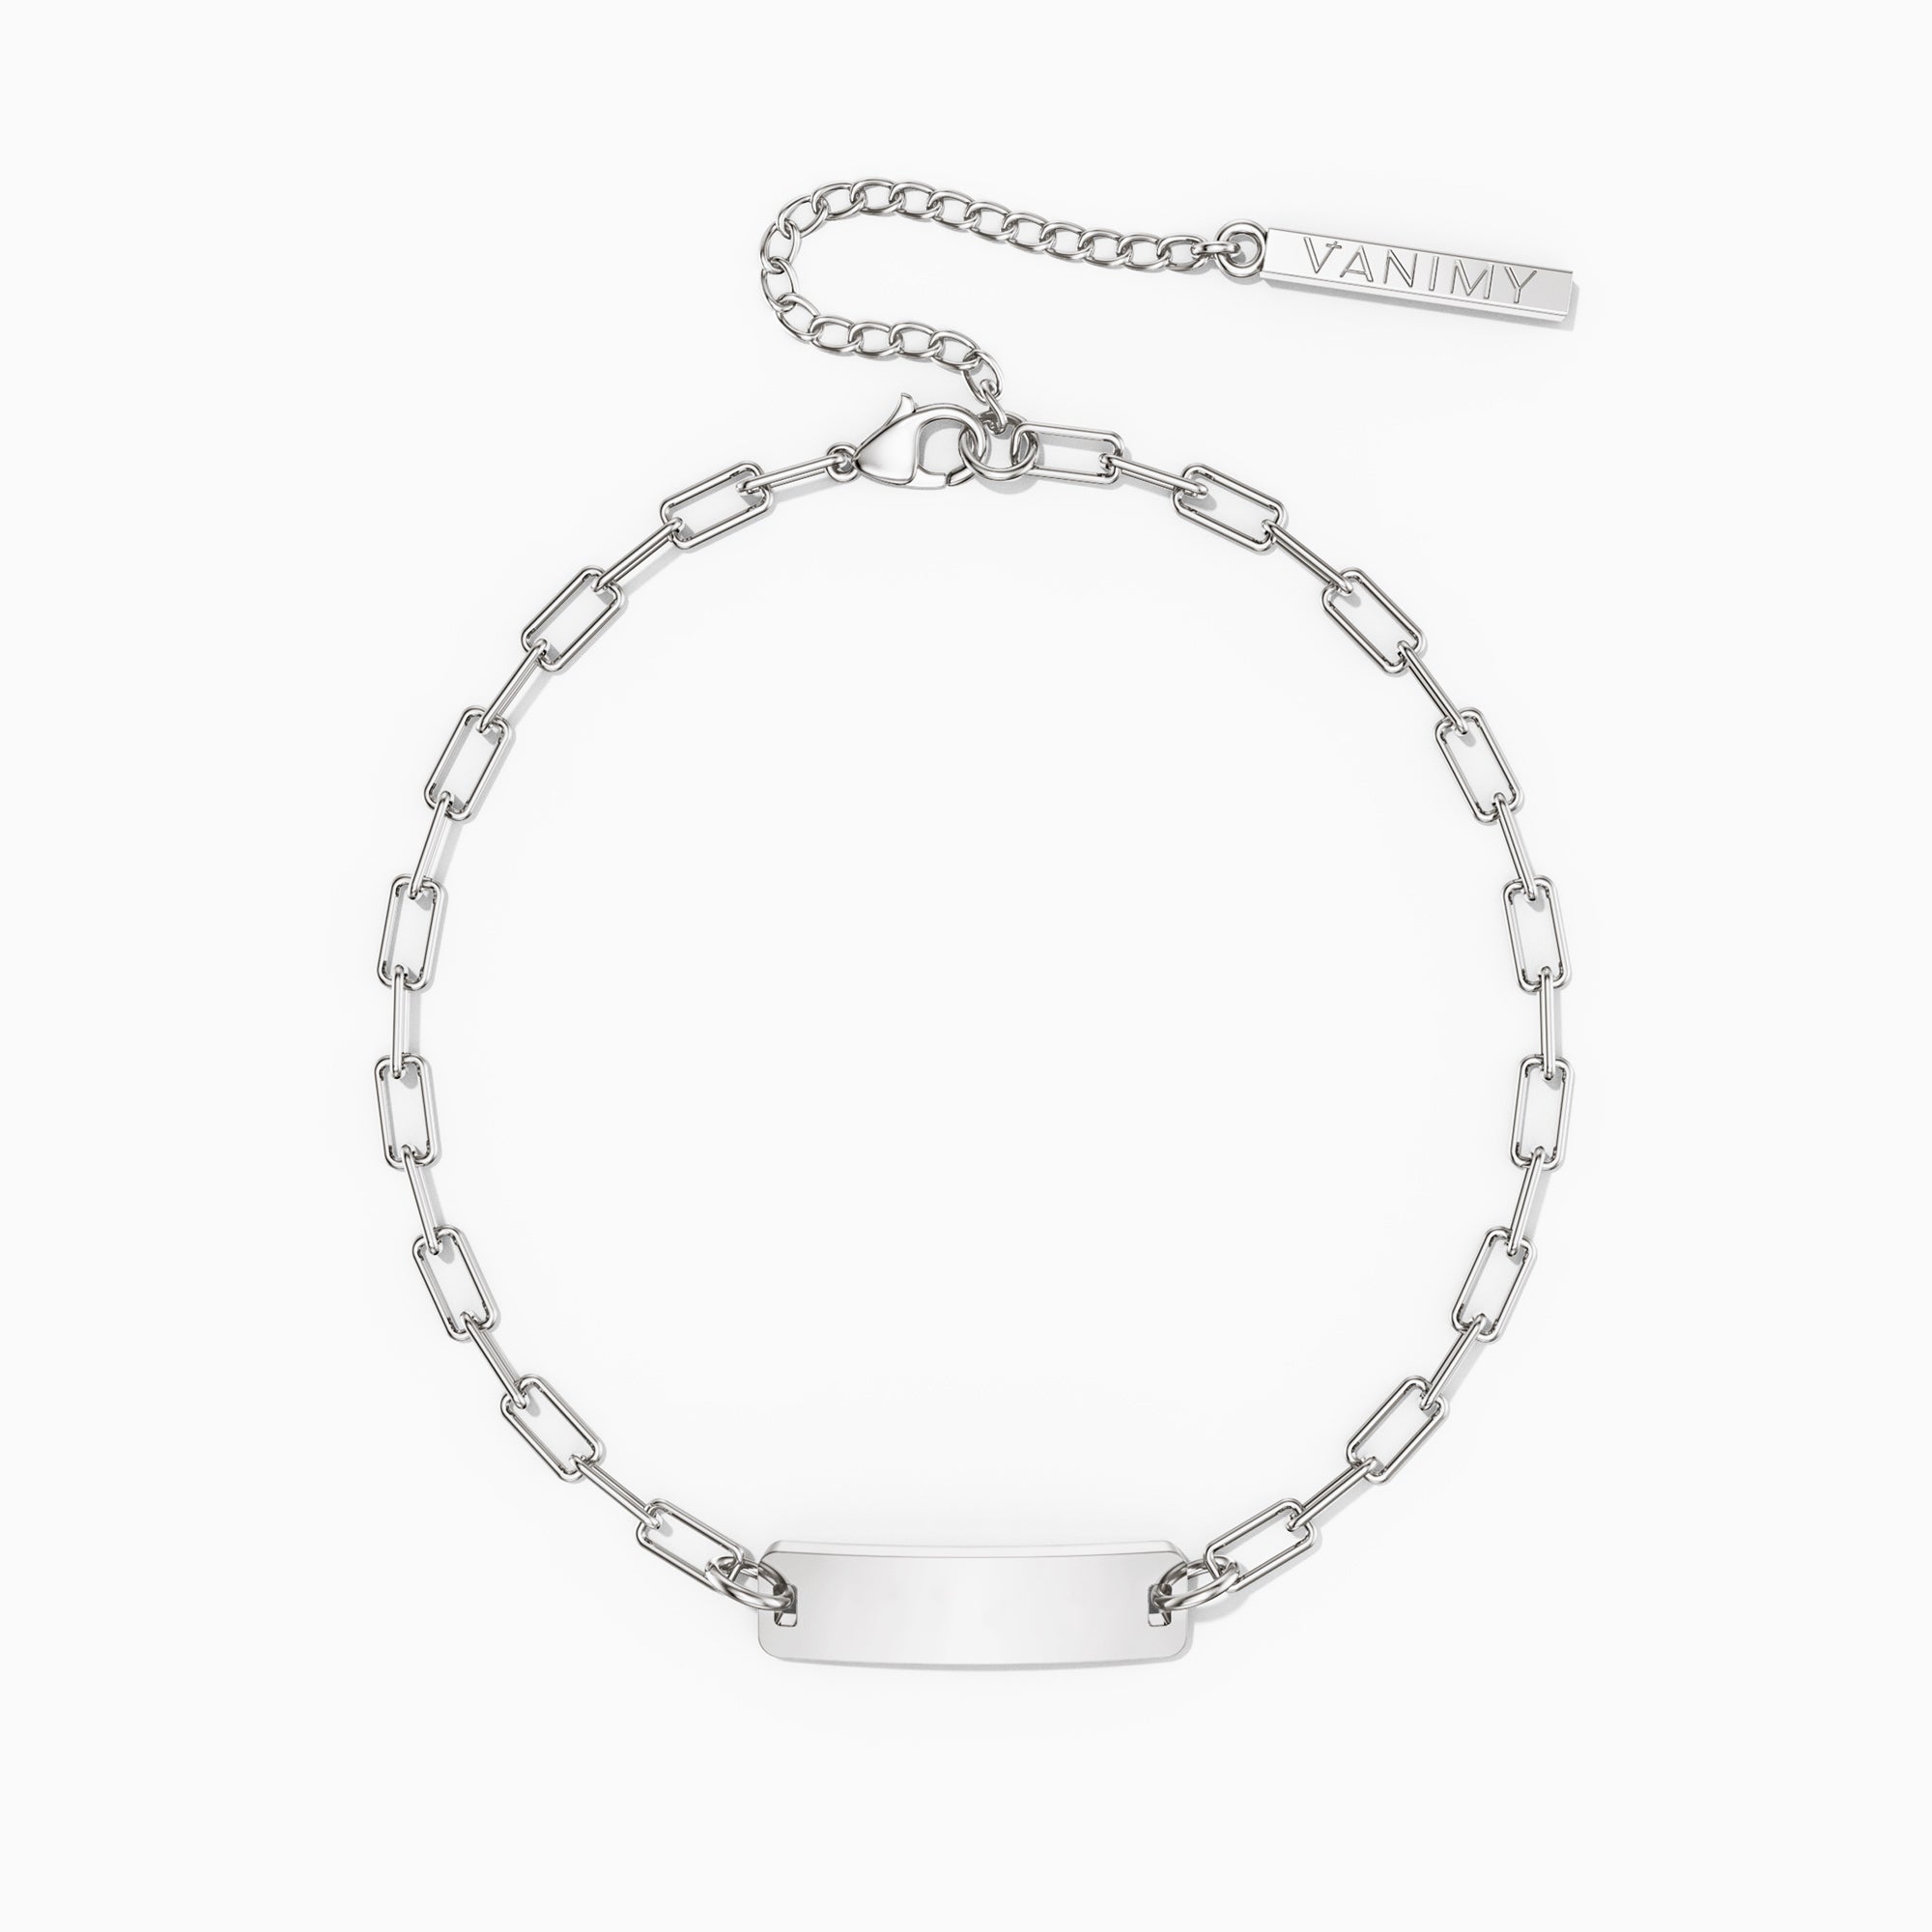 Personalized Love Token Bracelet - vanimy